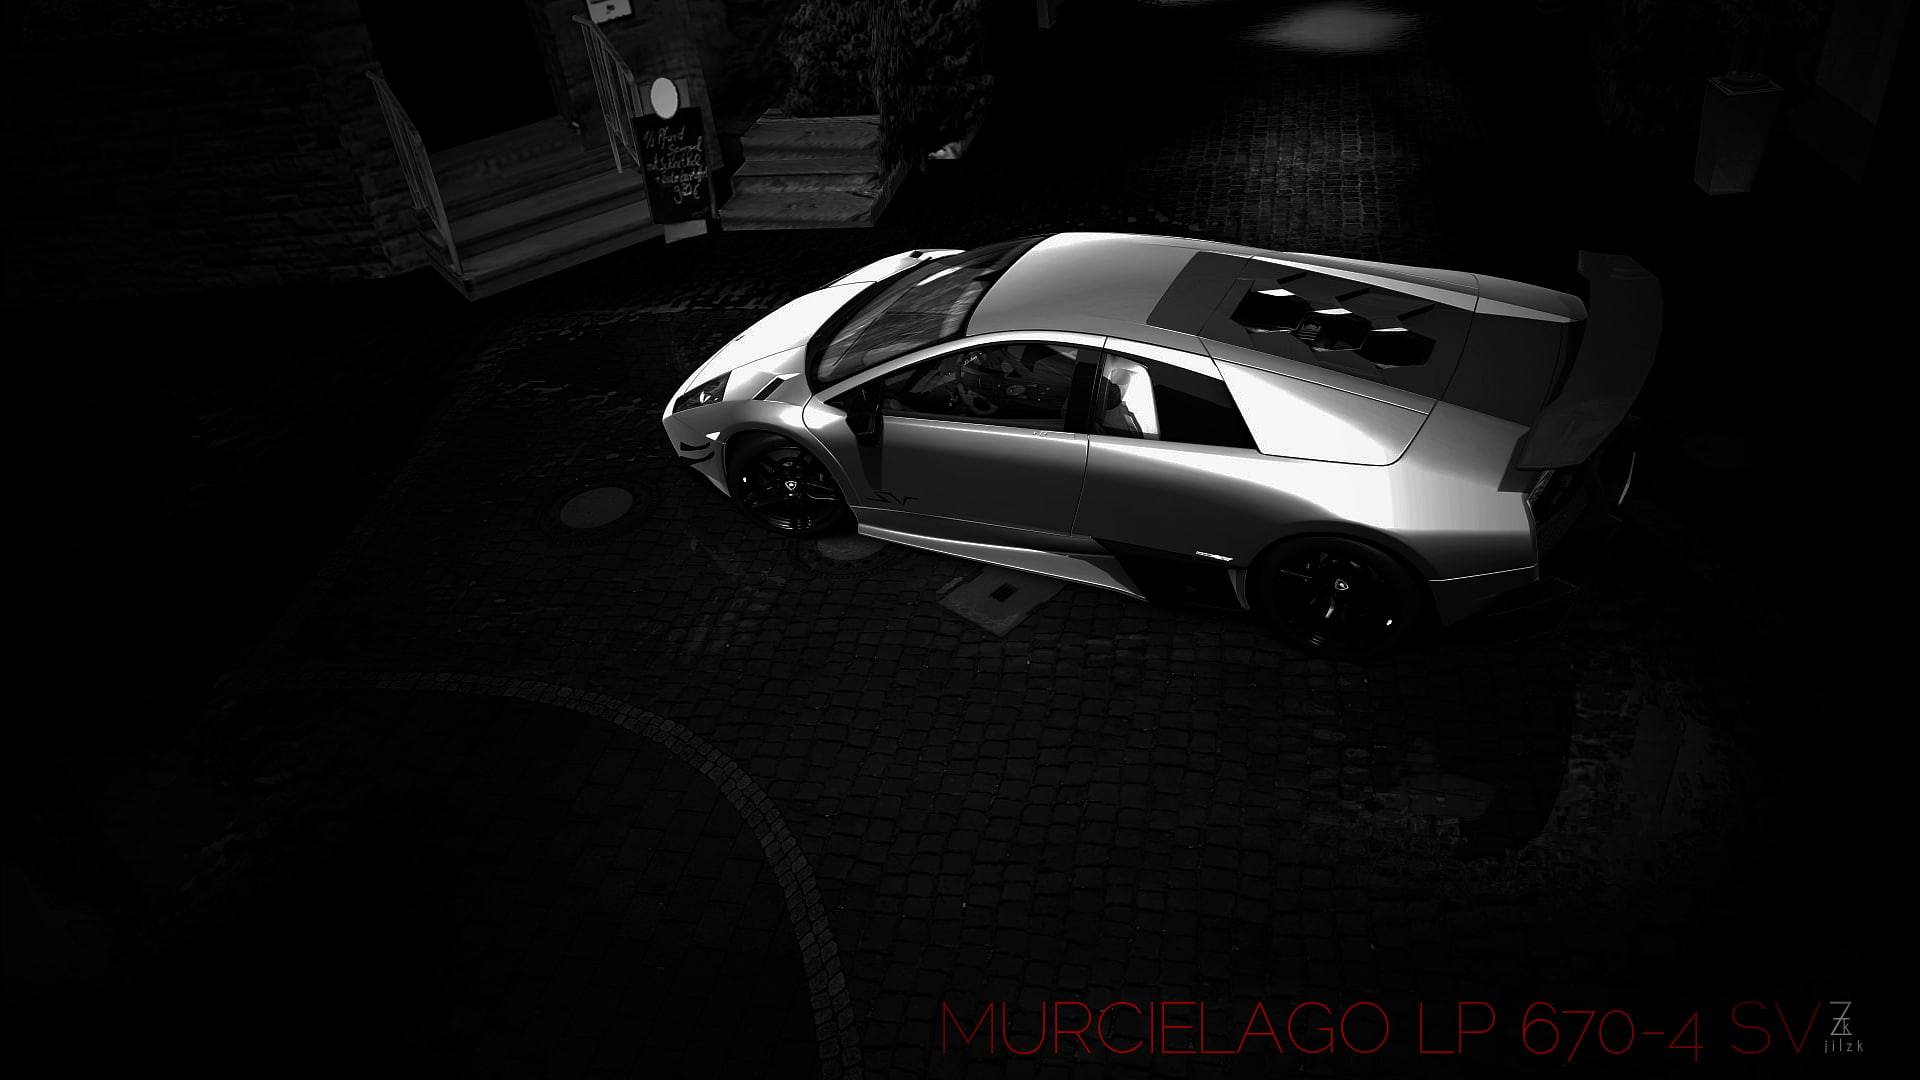 Lamborghini Murcielago, car, mode of transportation, motor vehicle